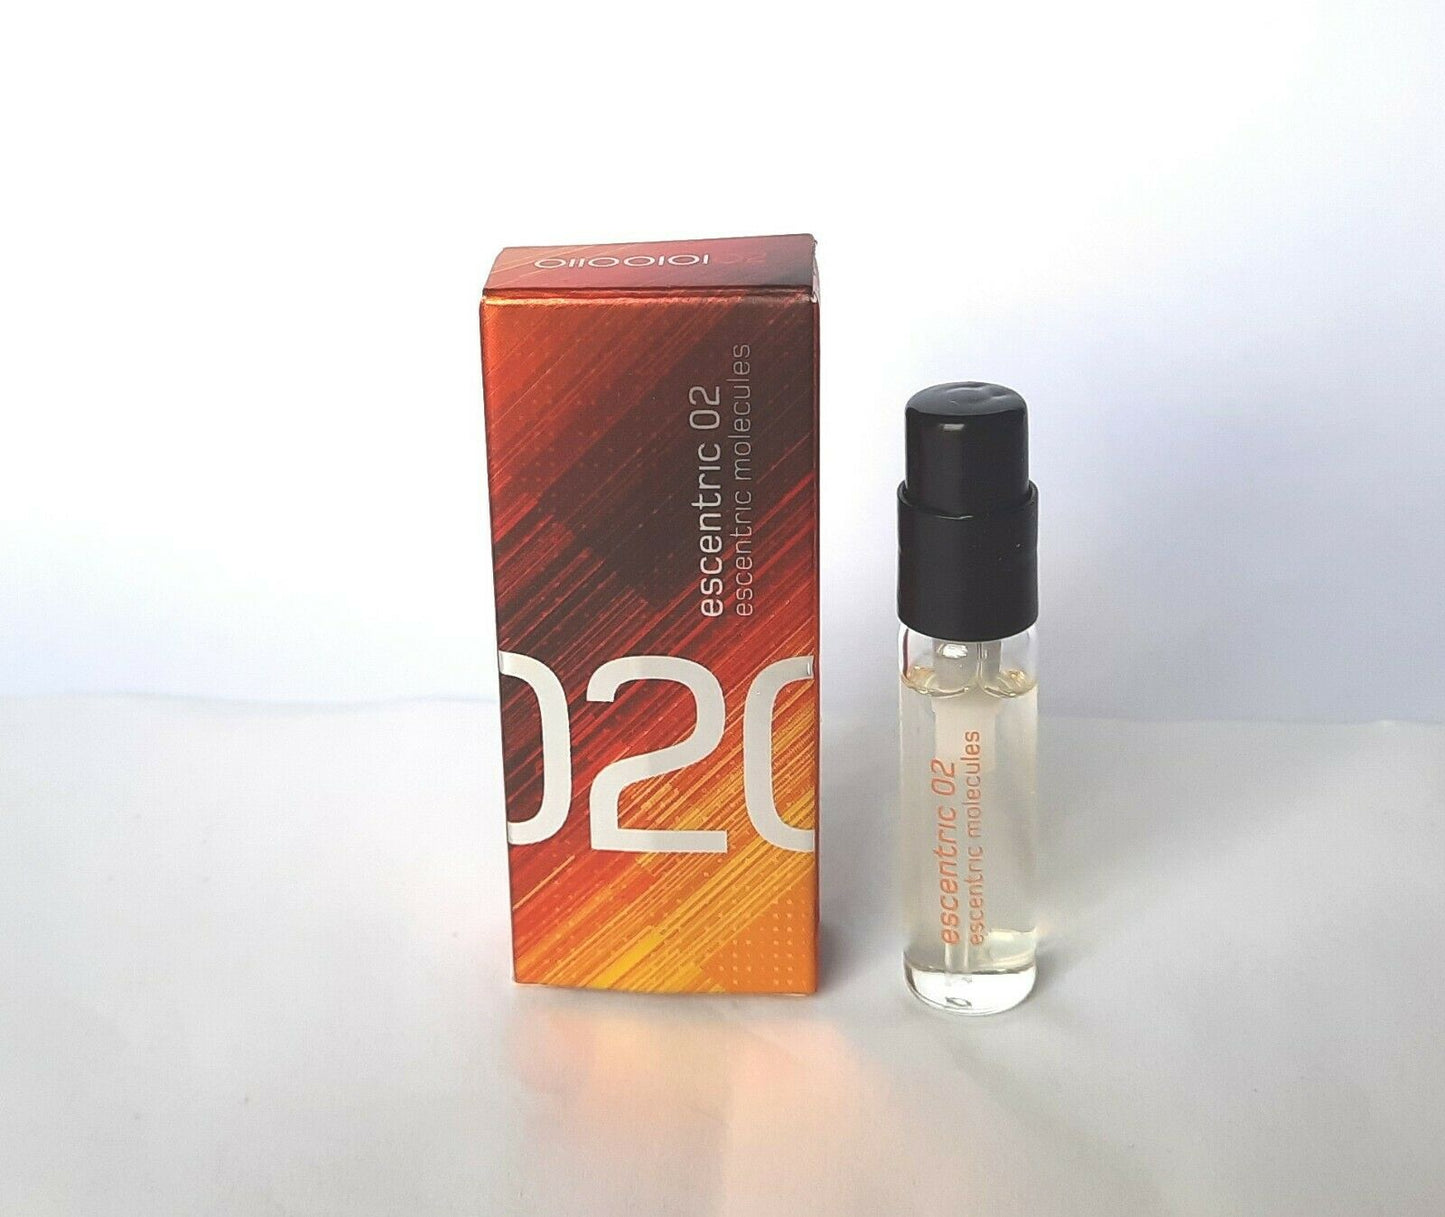 Escentric Molecules Escentric 02 hivatalos parfüm minta 2ml 0.06 fl. oz